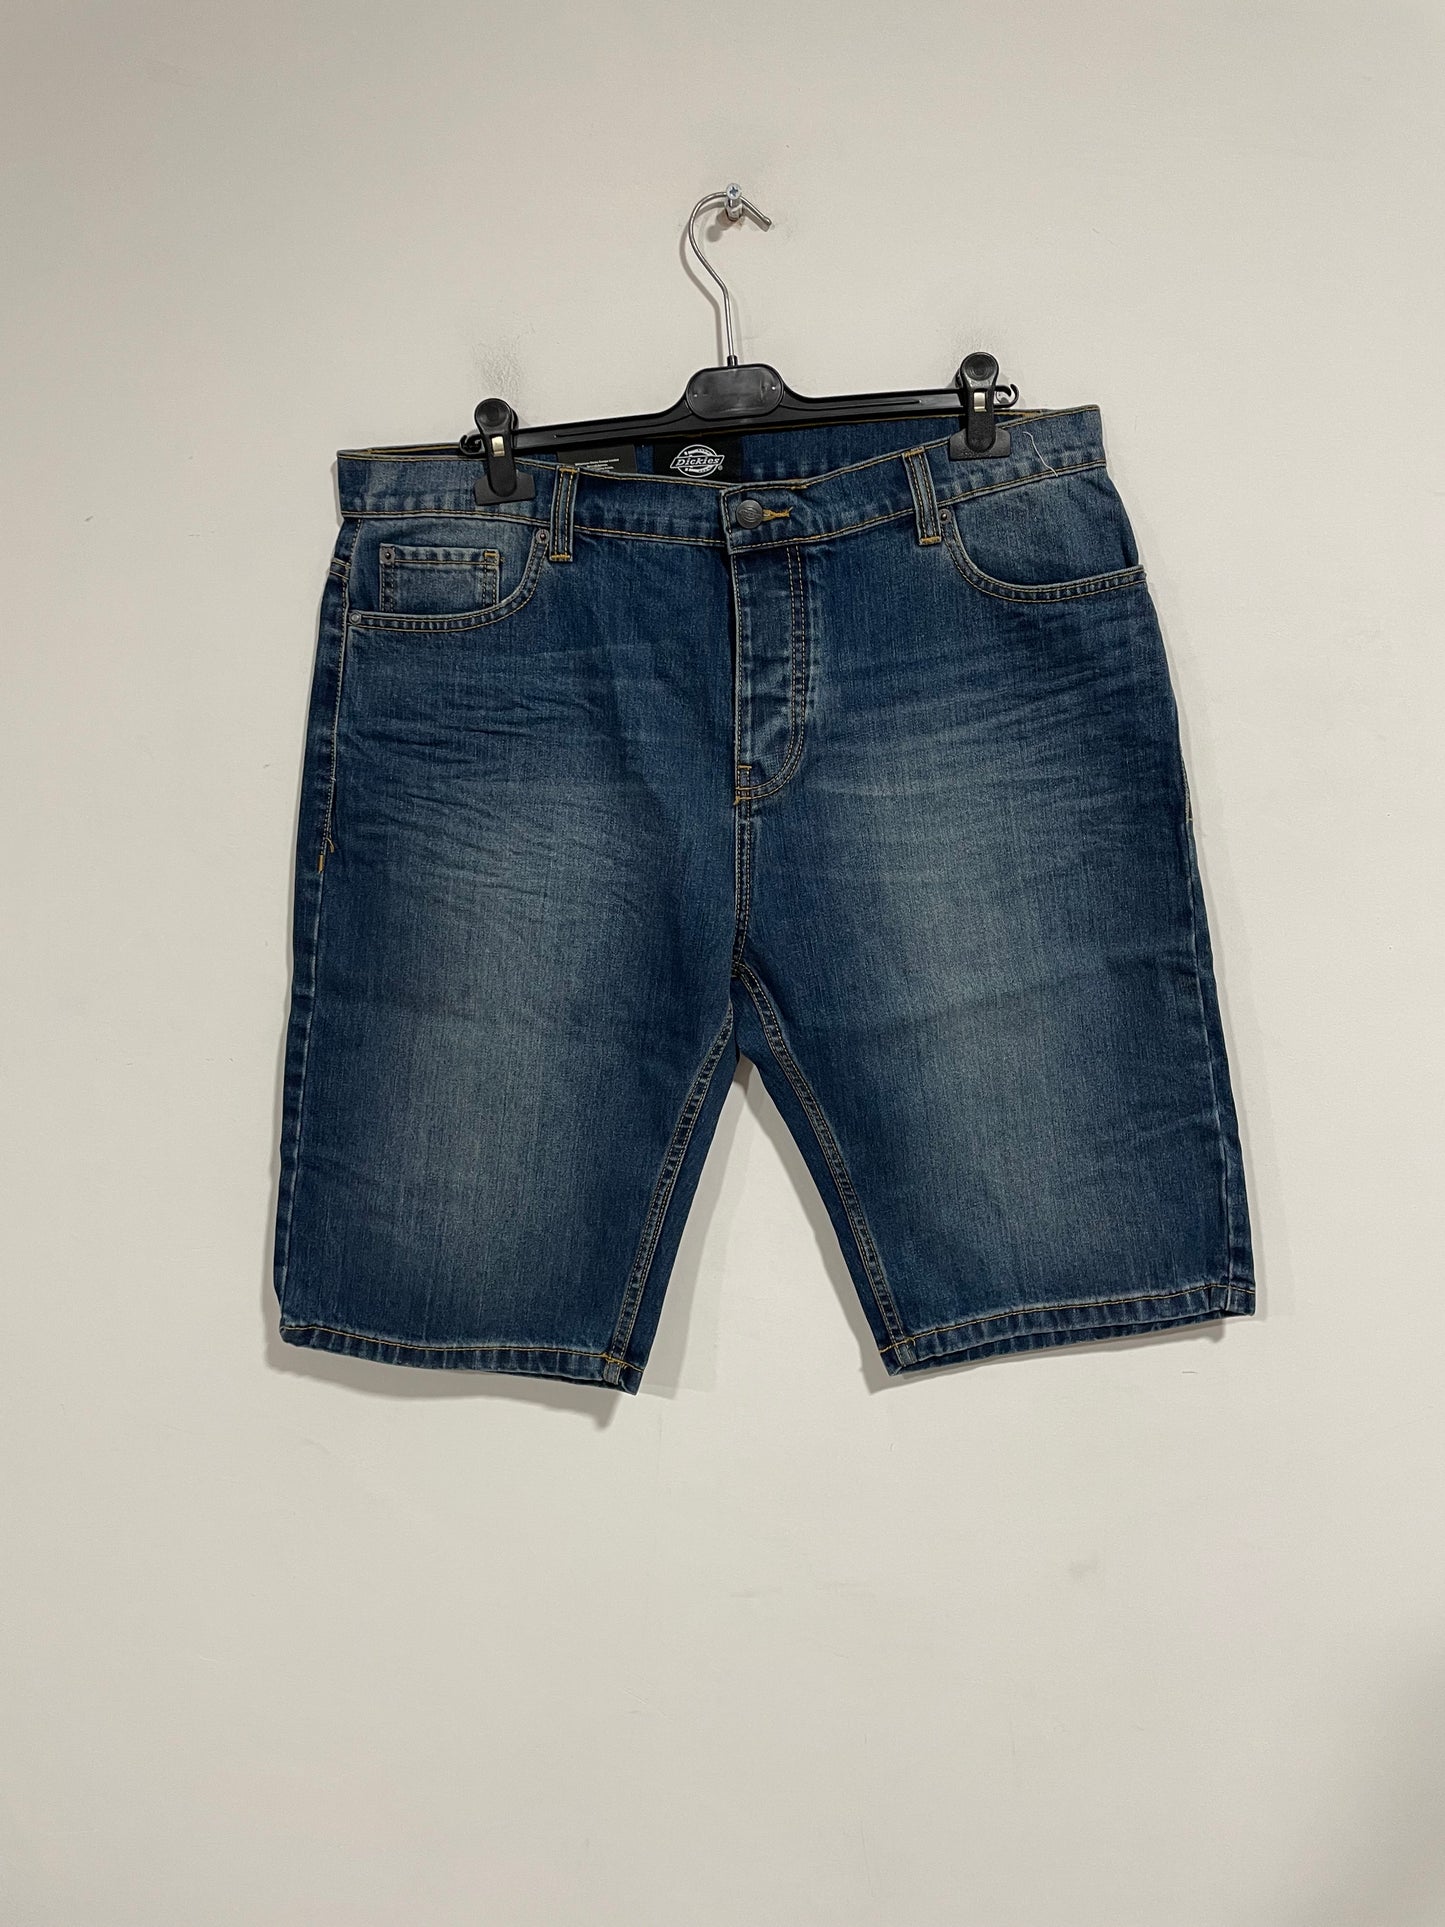 Bermuda in jeans Dickies nuovo con cartellino (D680)